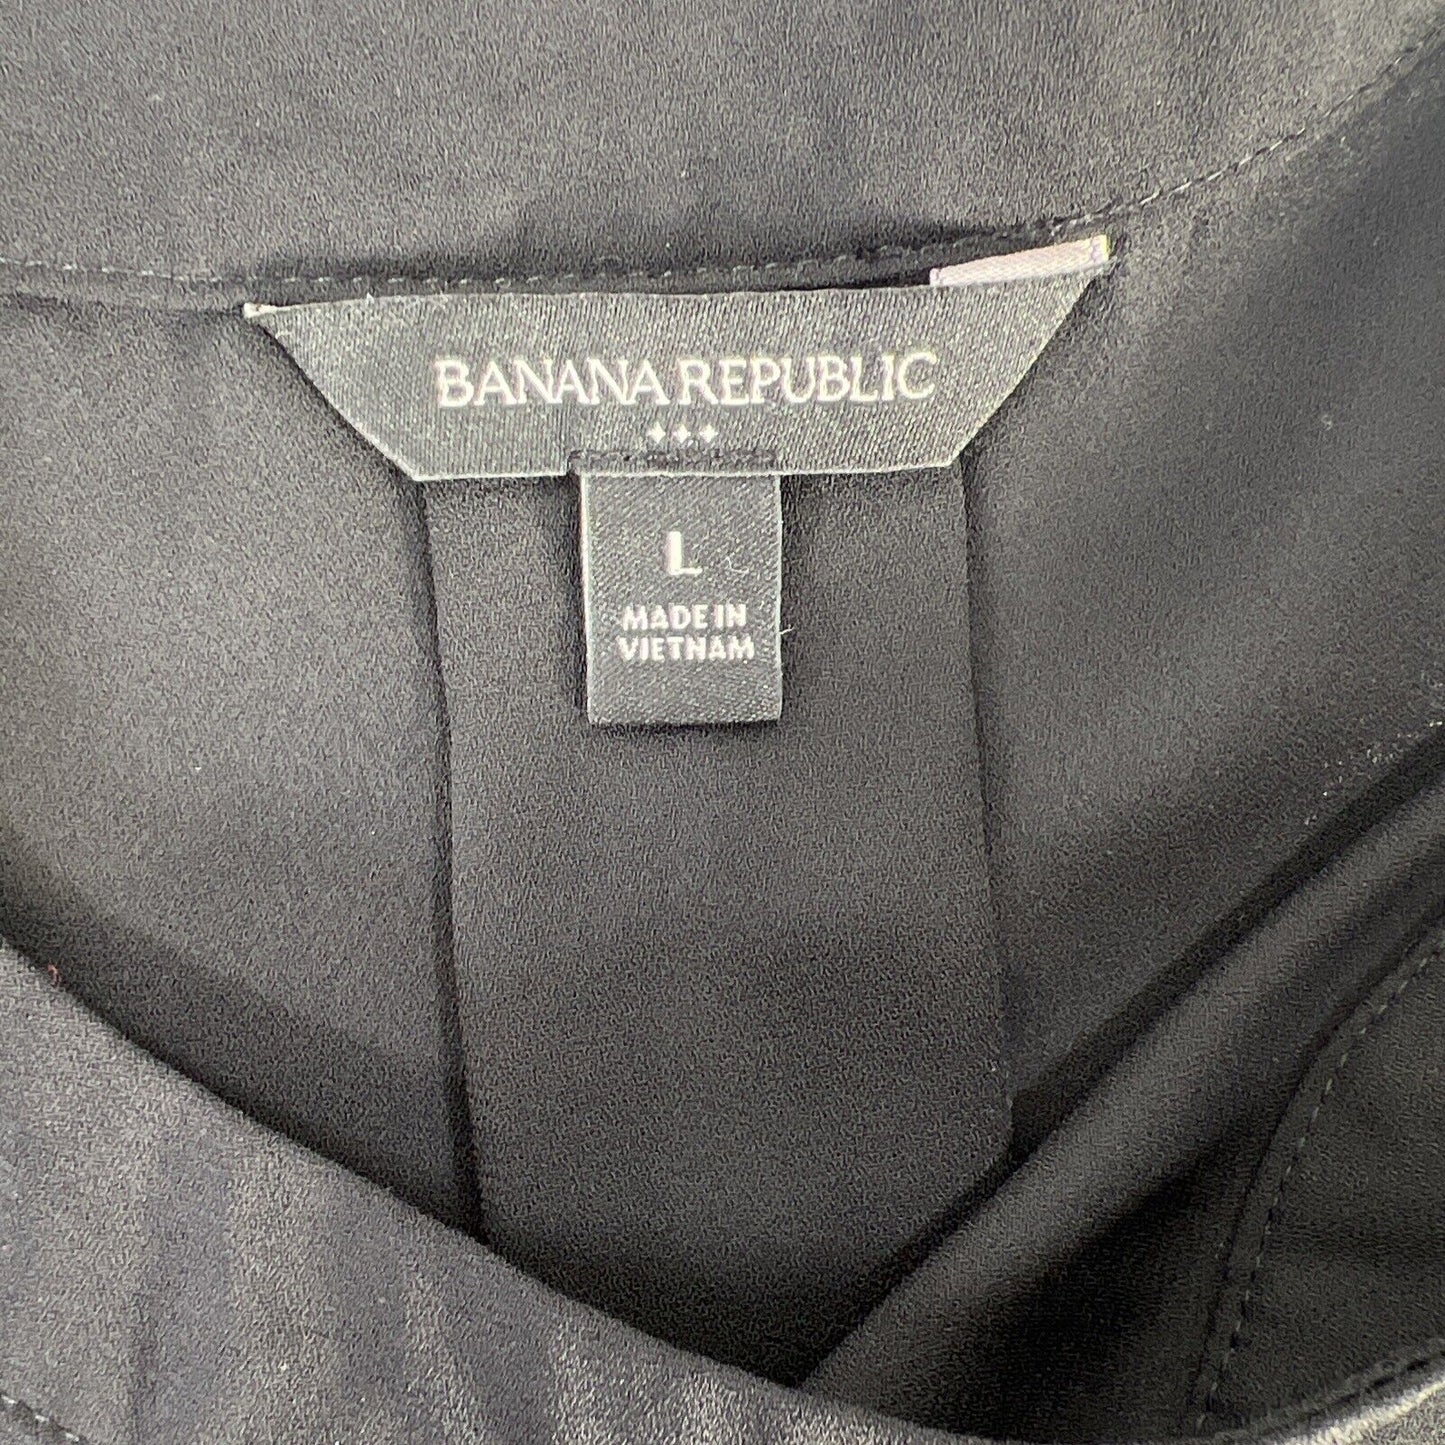 Banana Republic Blusa negra de manga larga transparente para mujer - L